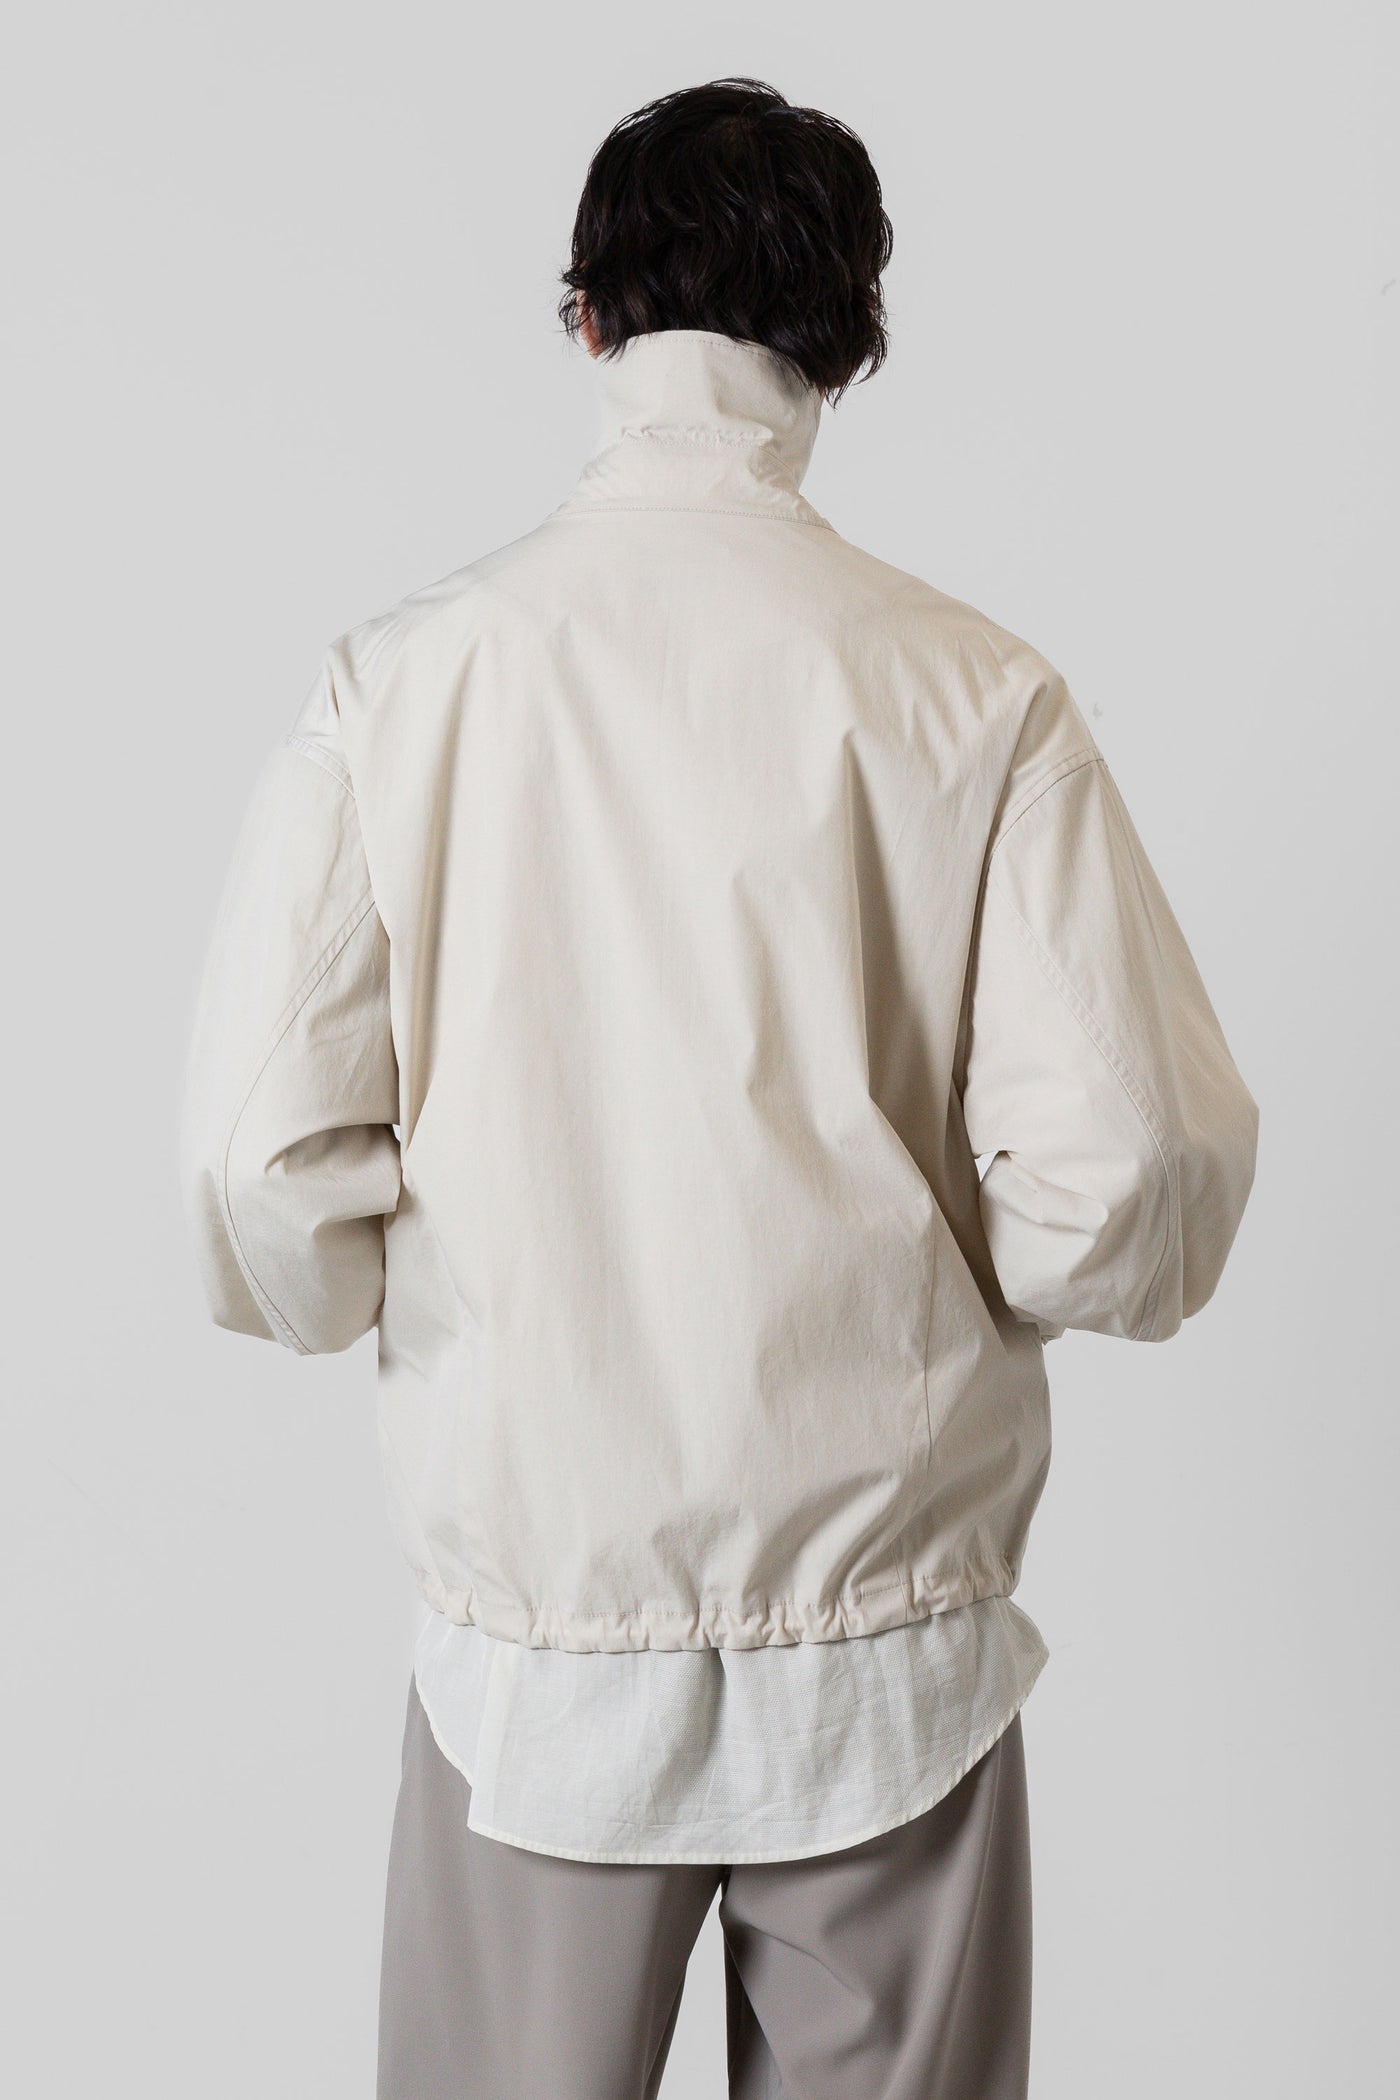 Released in February AB41-016 Cotton/Nylon Weather Cross Flight Jacket